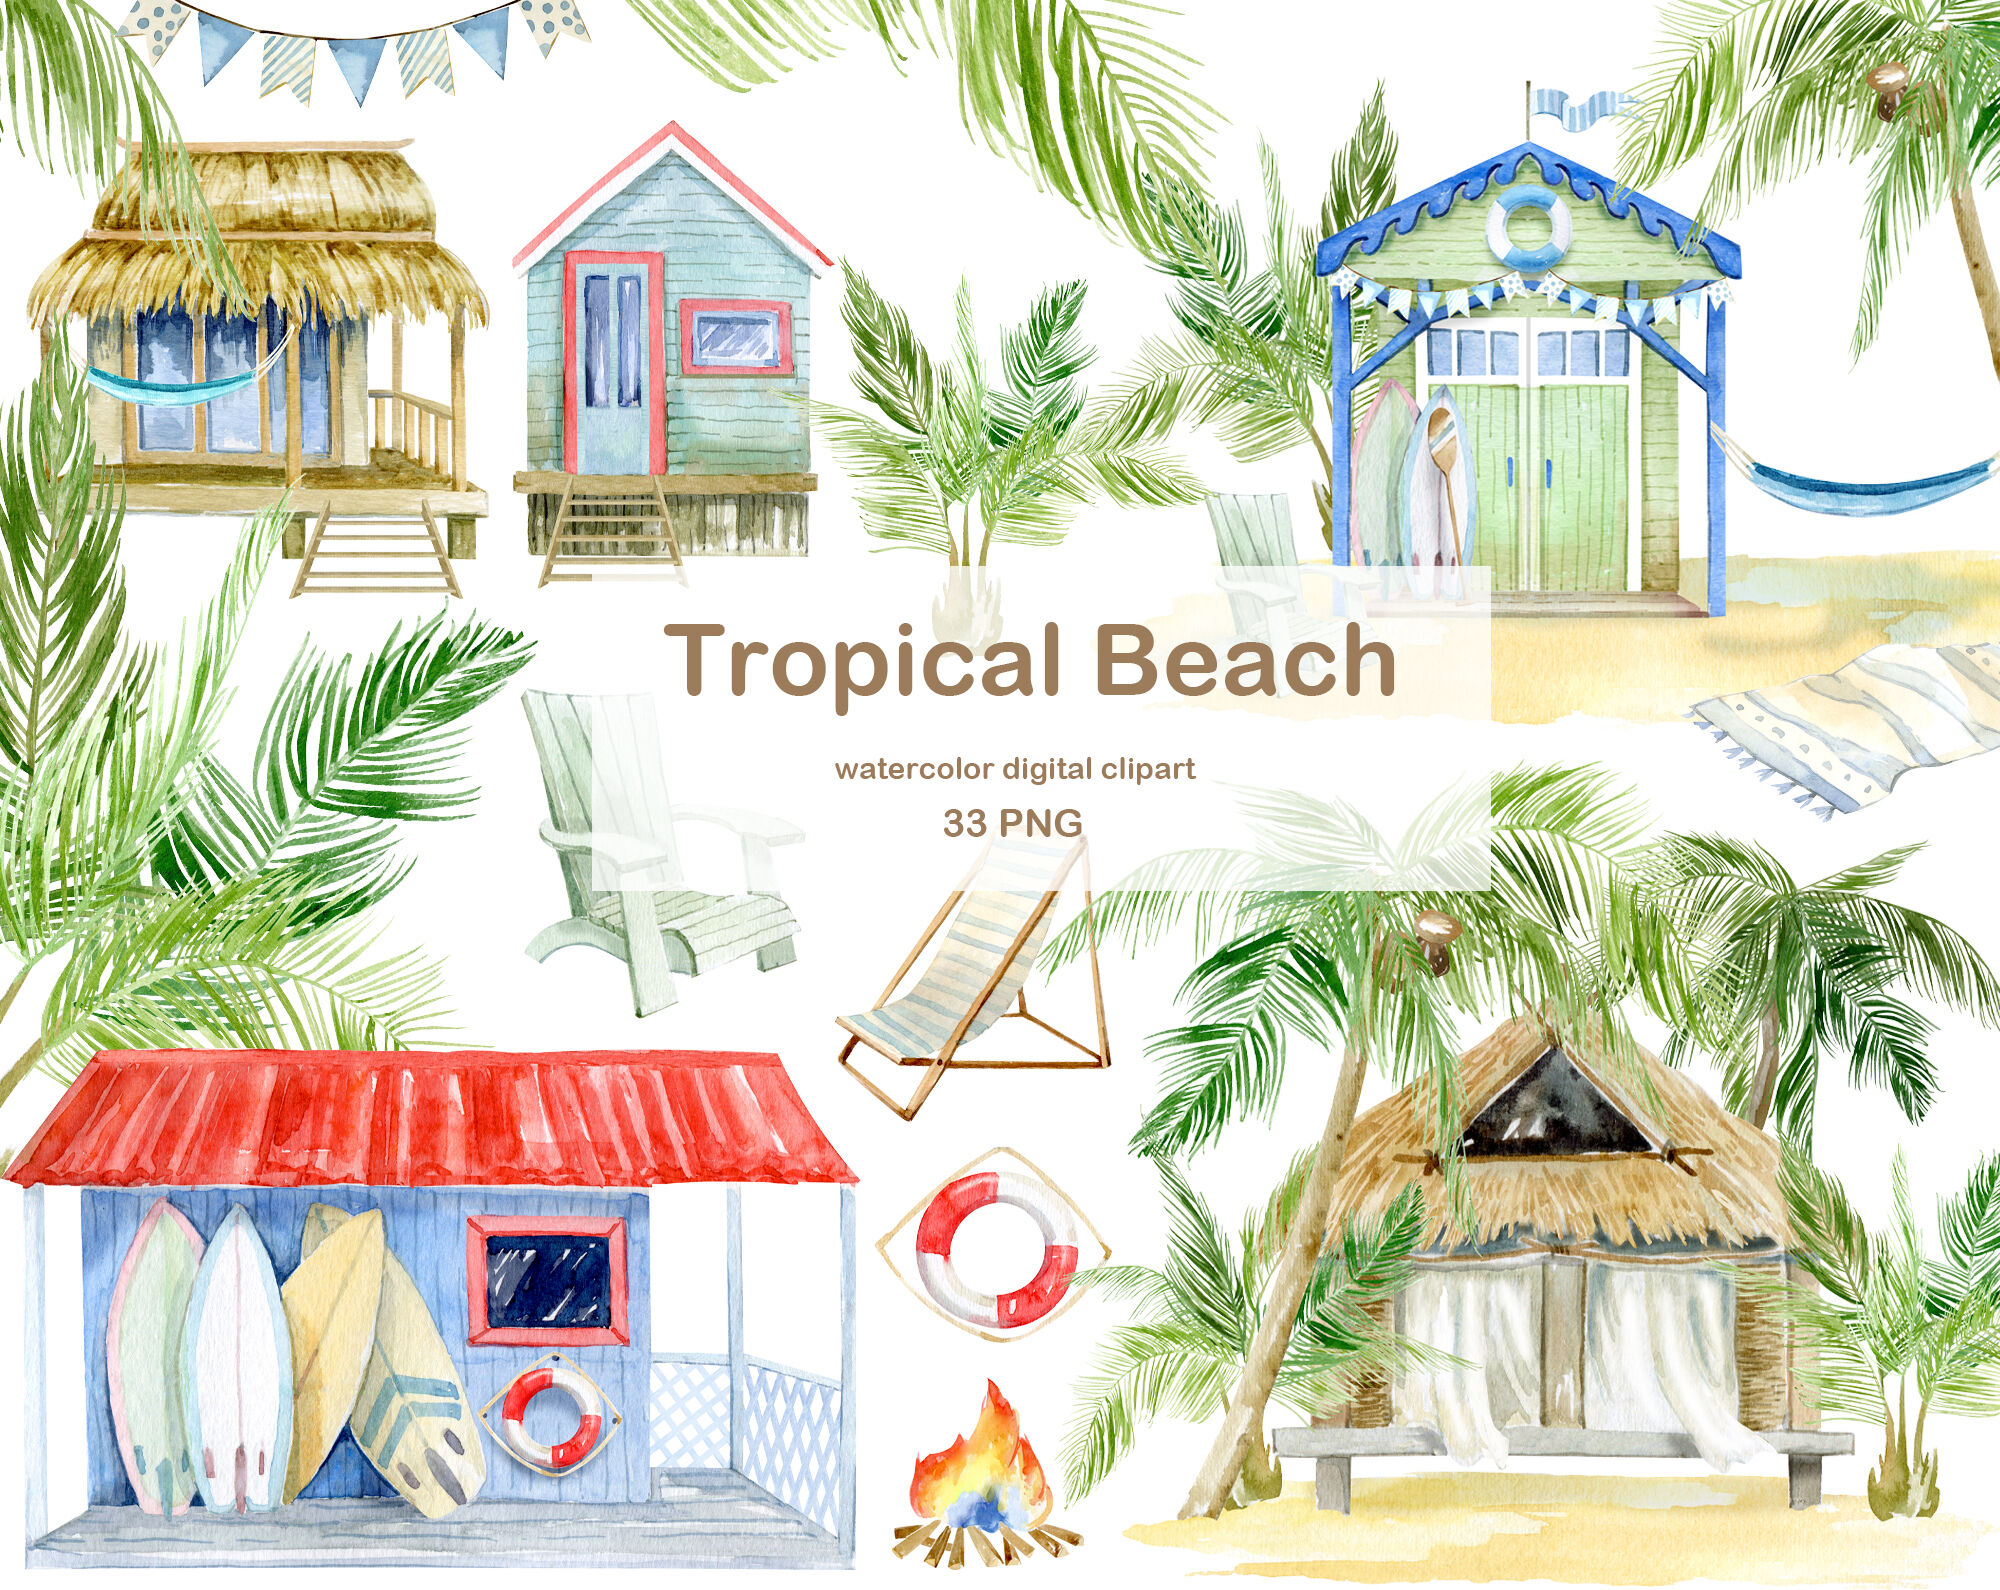 Ori 4260847 1ilvw3bri2lo5voh0bxakolqqe2uwbrn792koelq Watercolor Tropical Beach House Clipart House Illustration Summer 